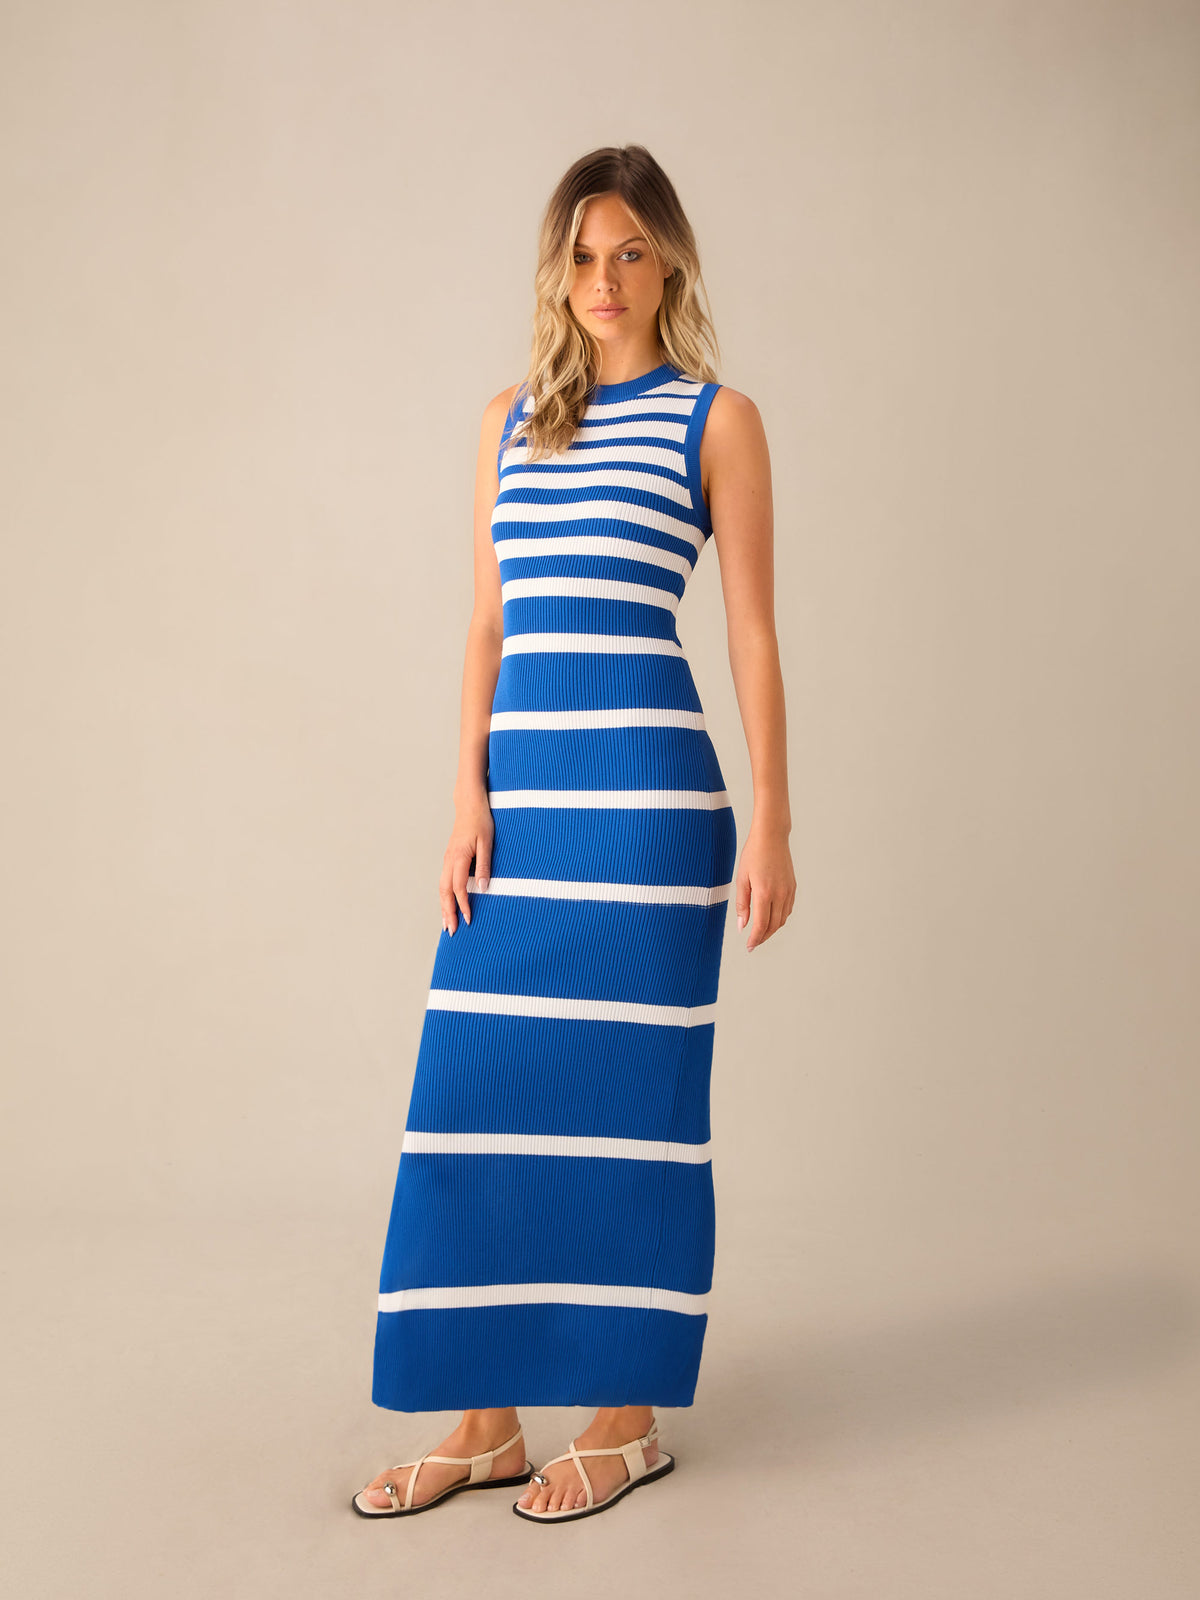 Blue Stripe Sleeveless Knitted Dress